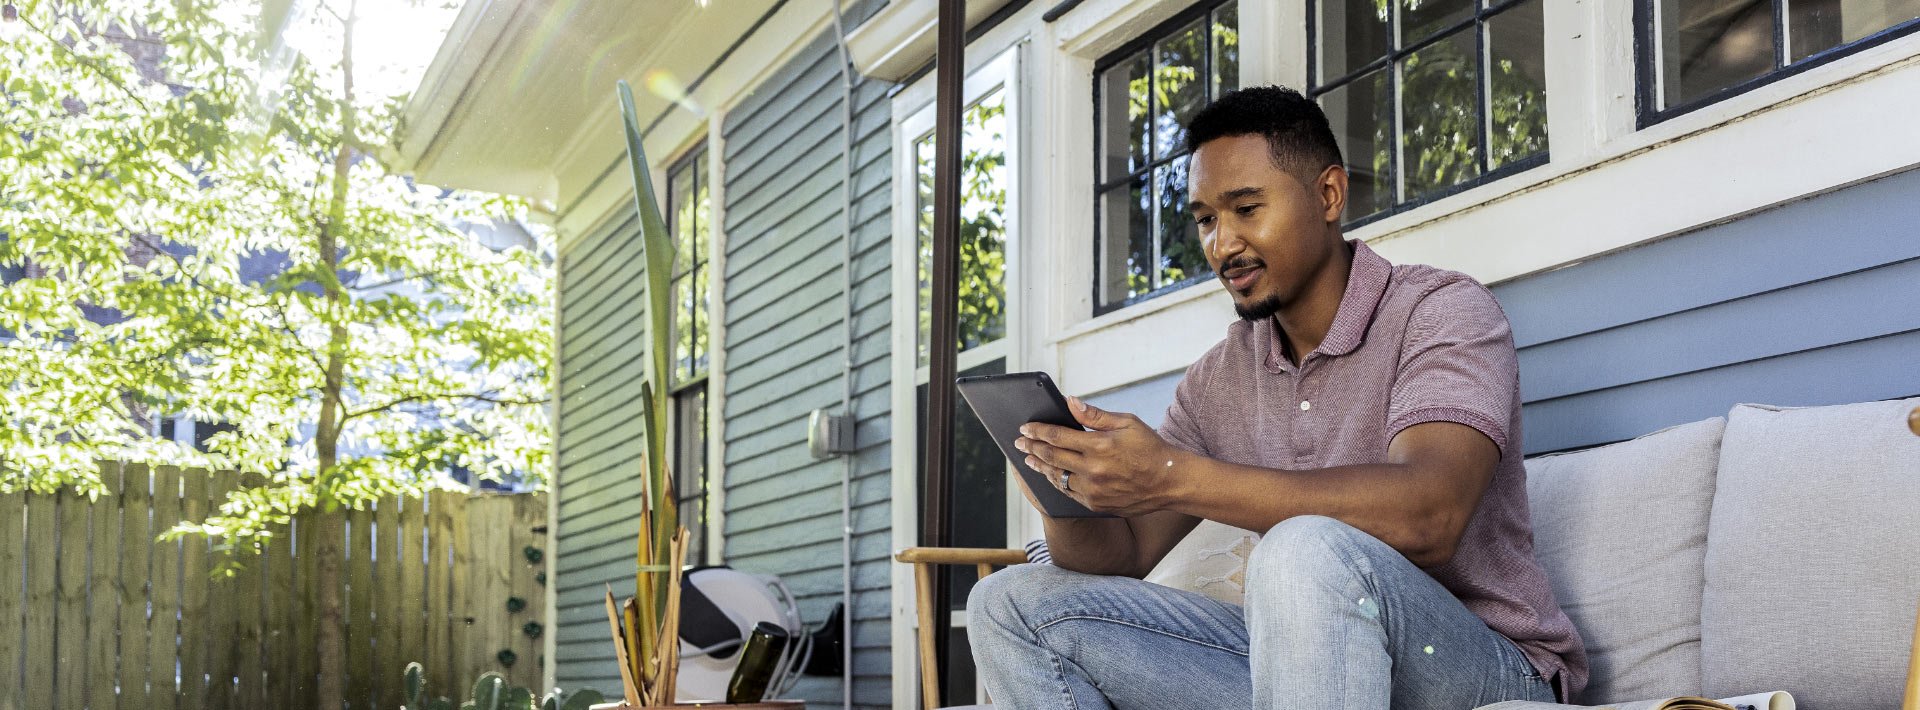 Man reading tablet sitting on porch